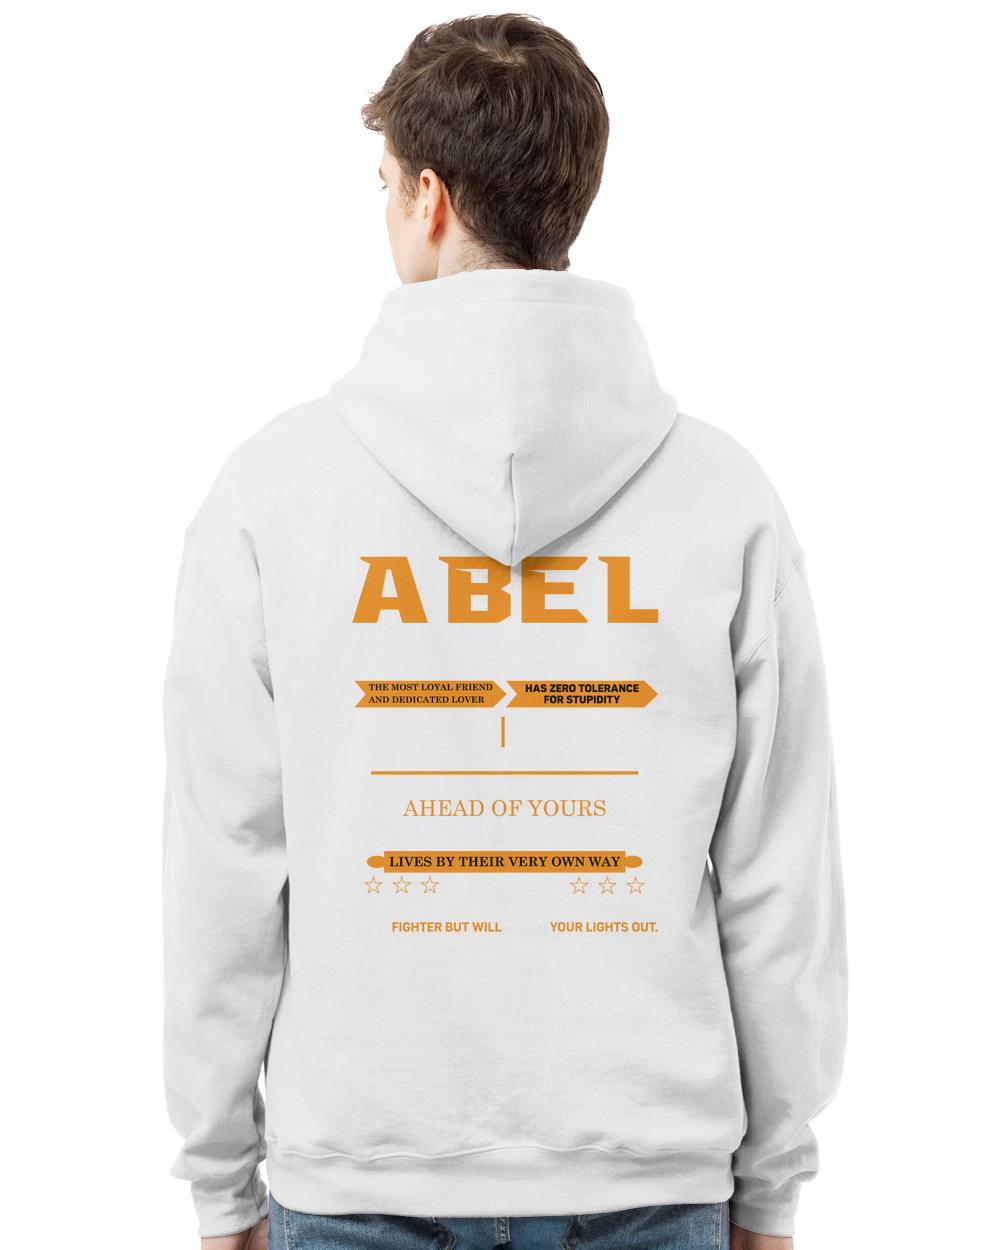 ABEL-13K-N1-01